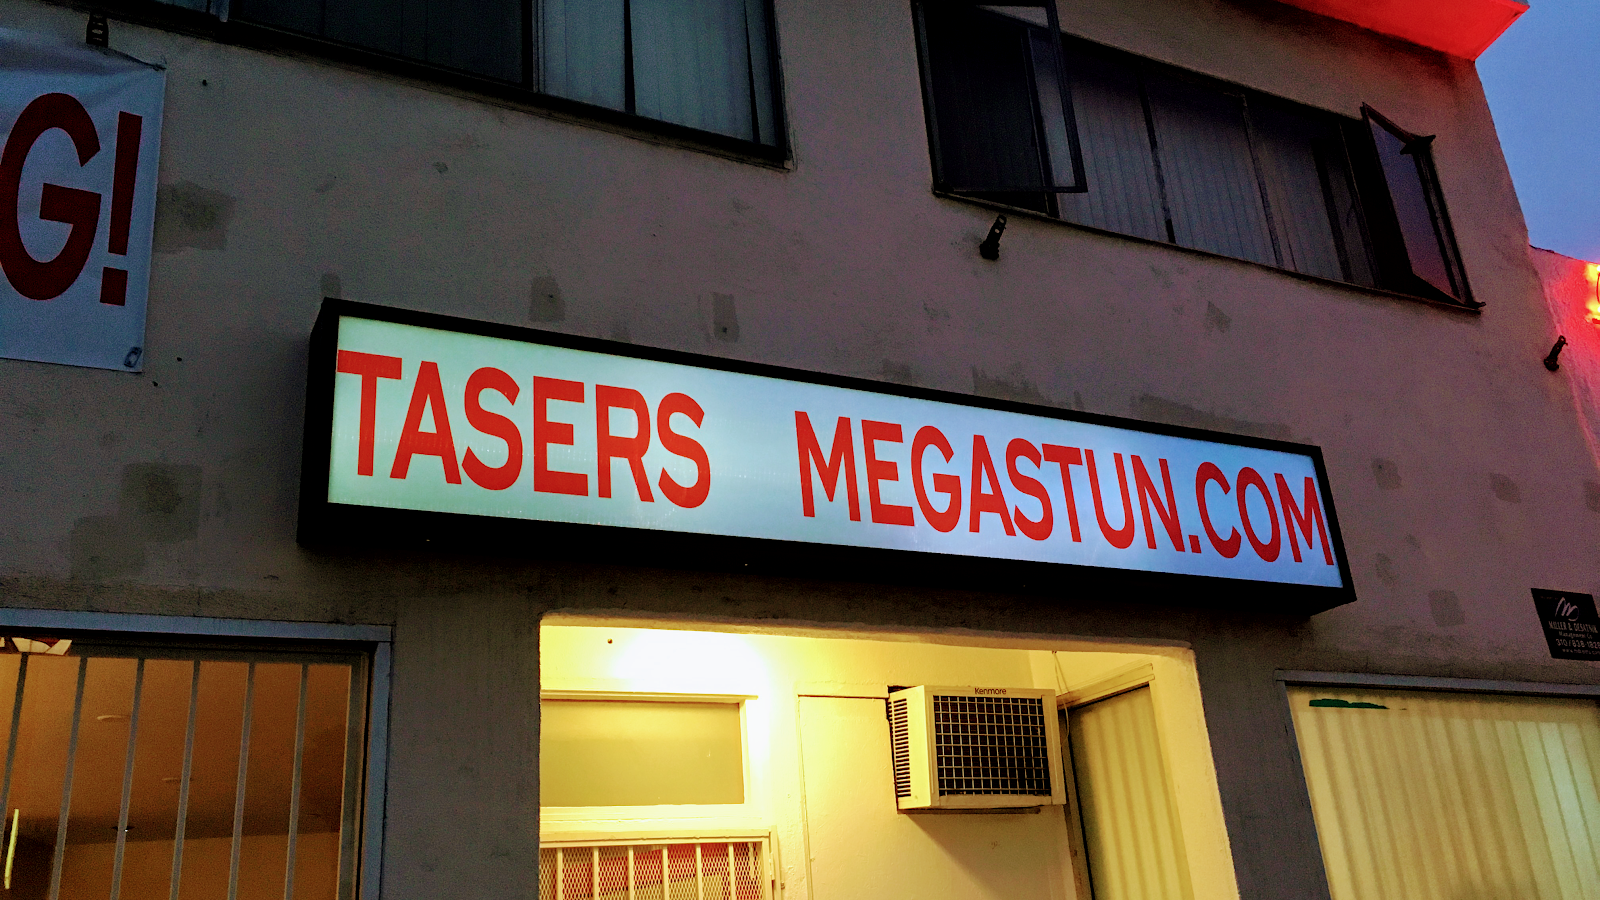 Member O-MEGA STUN GUNS, TASERS & MEGASTUN.COM in Los Angeles CA